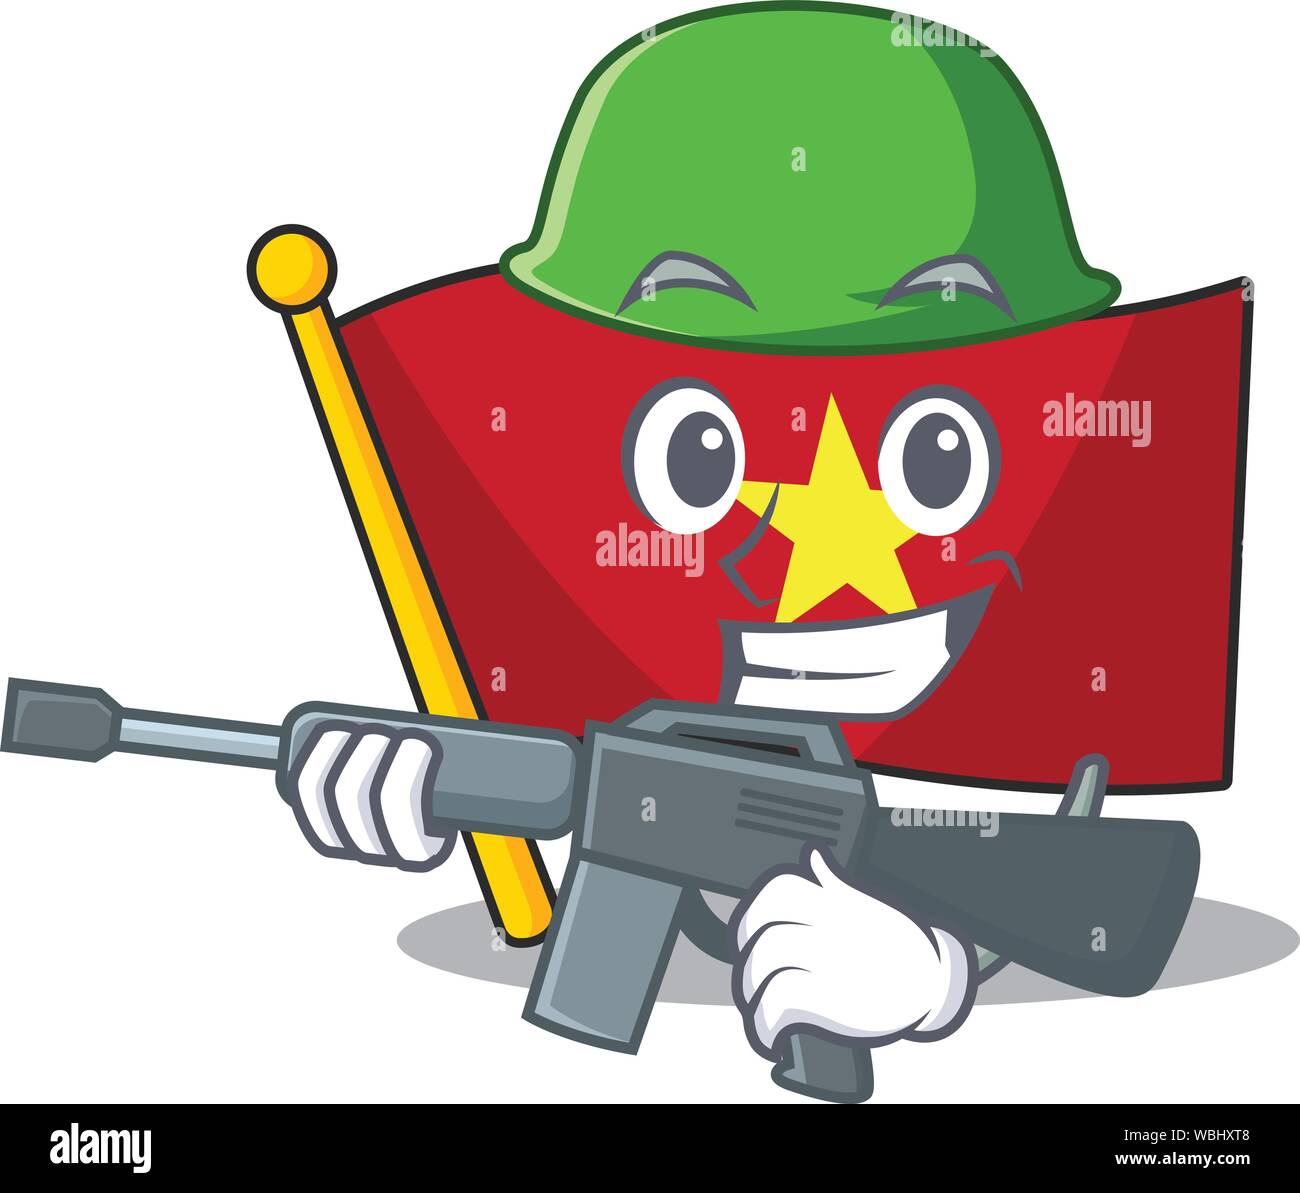 Army vietnam flag in the cartoon shape Stock Vector